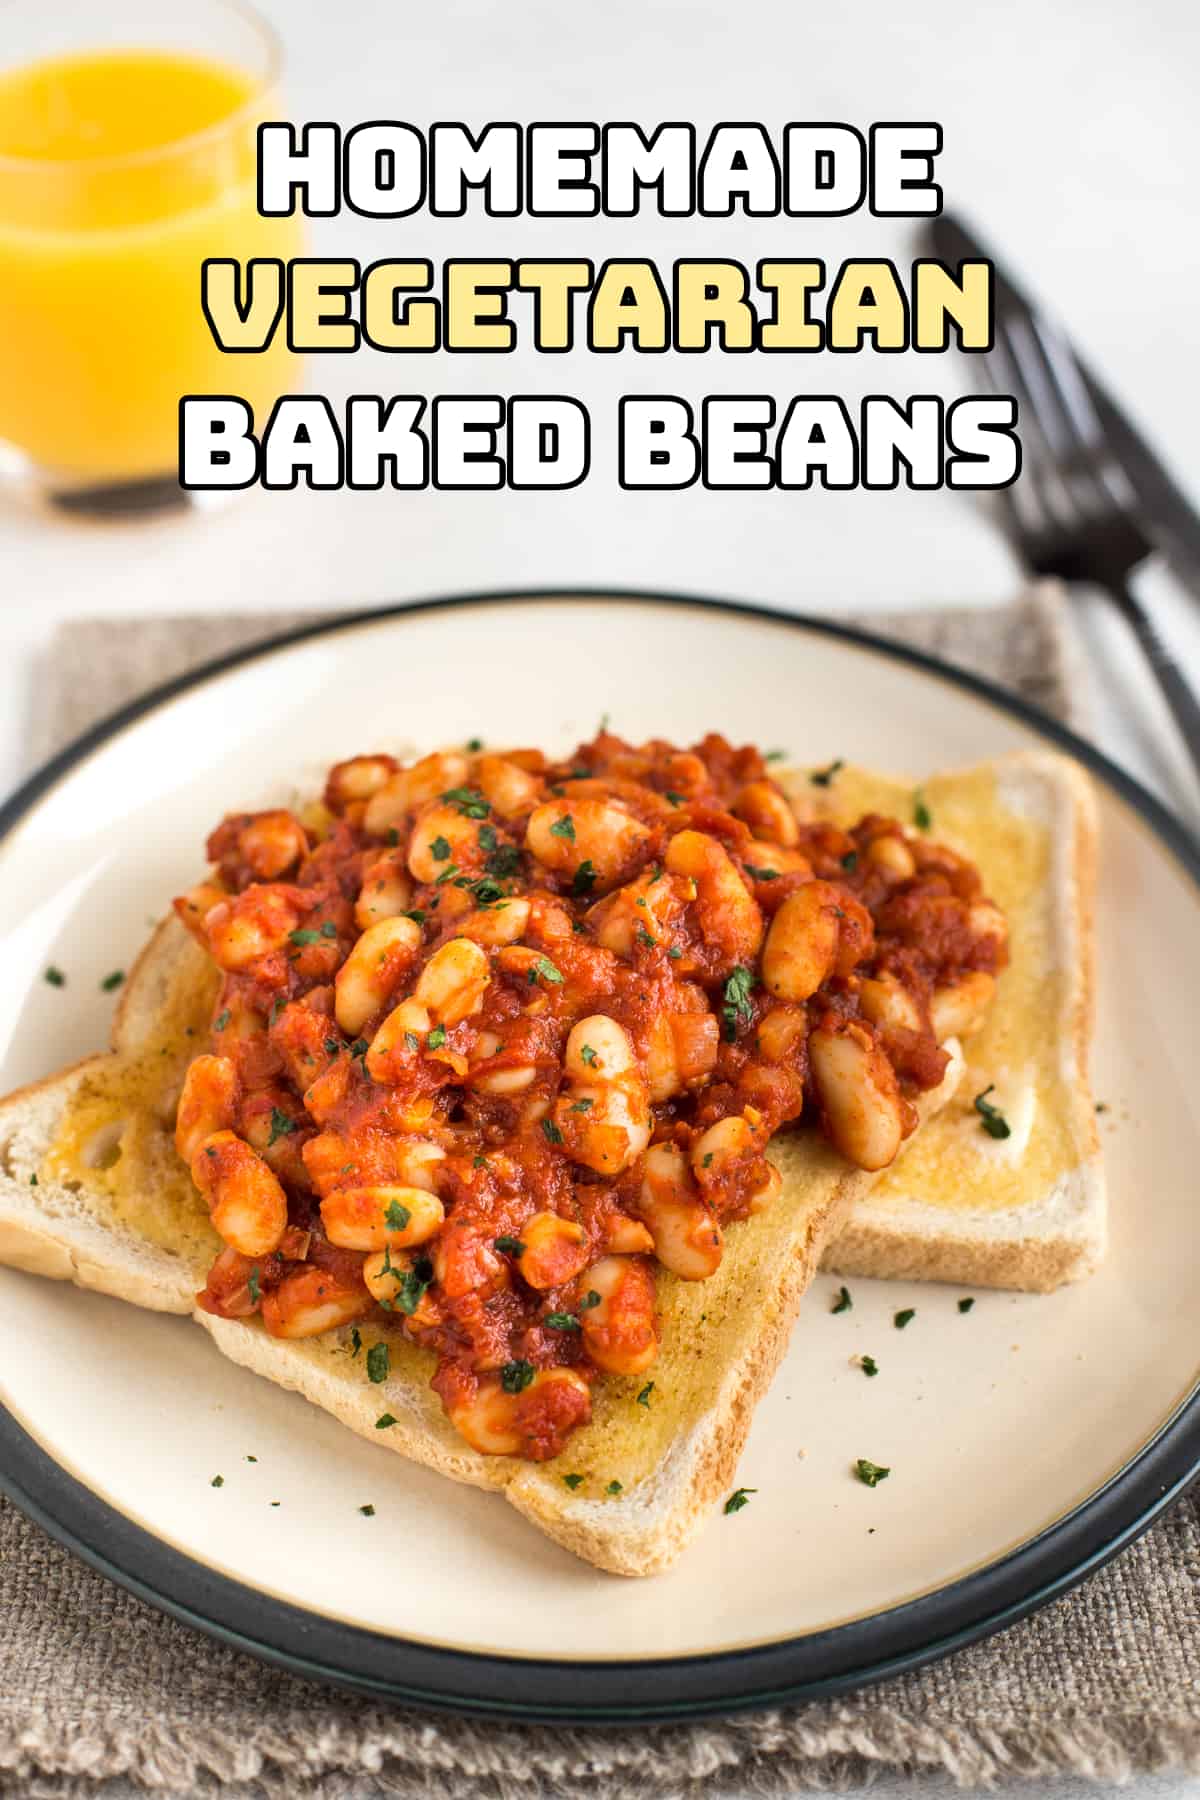 Homemade baked beans on buttered toast.